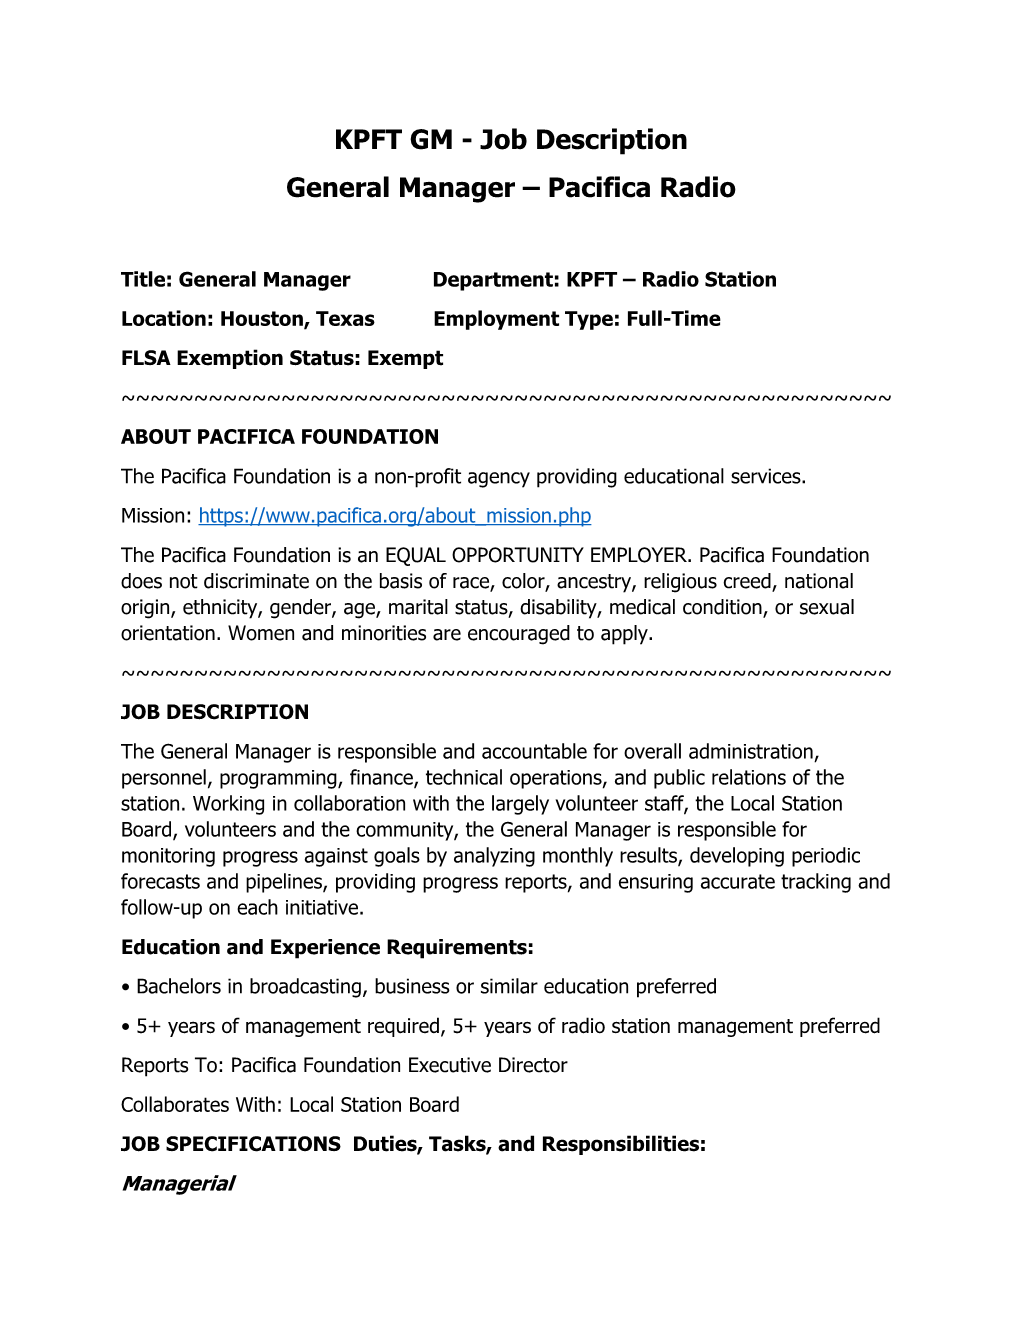 KPFT GM - Job Description General Manager – Pacifica Radio